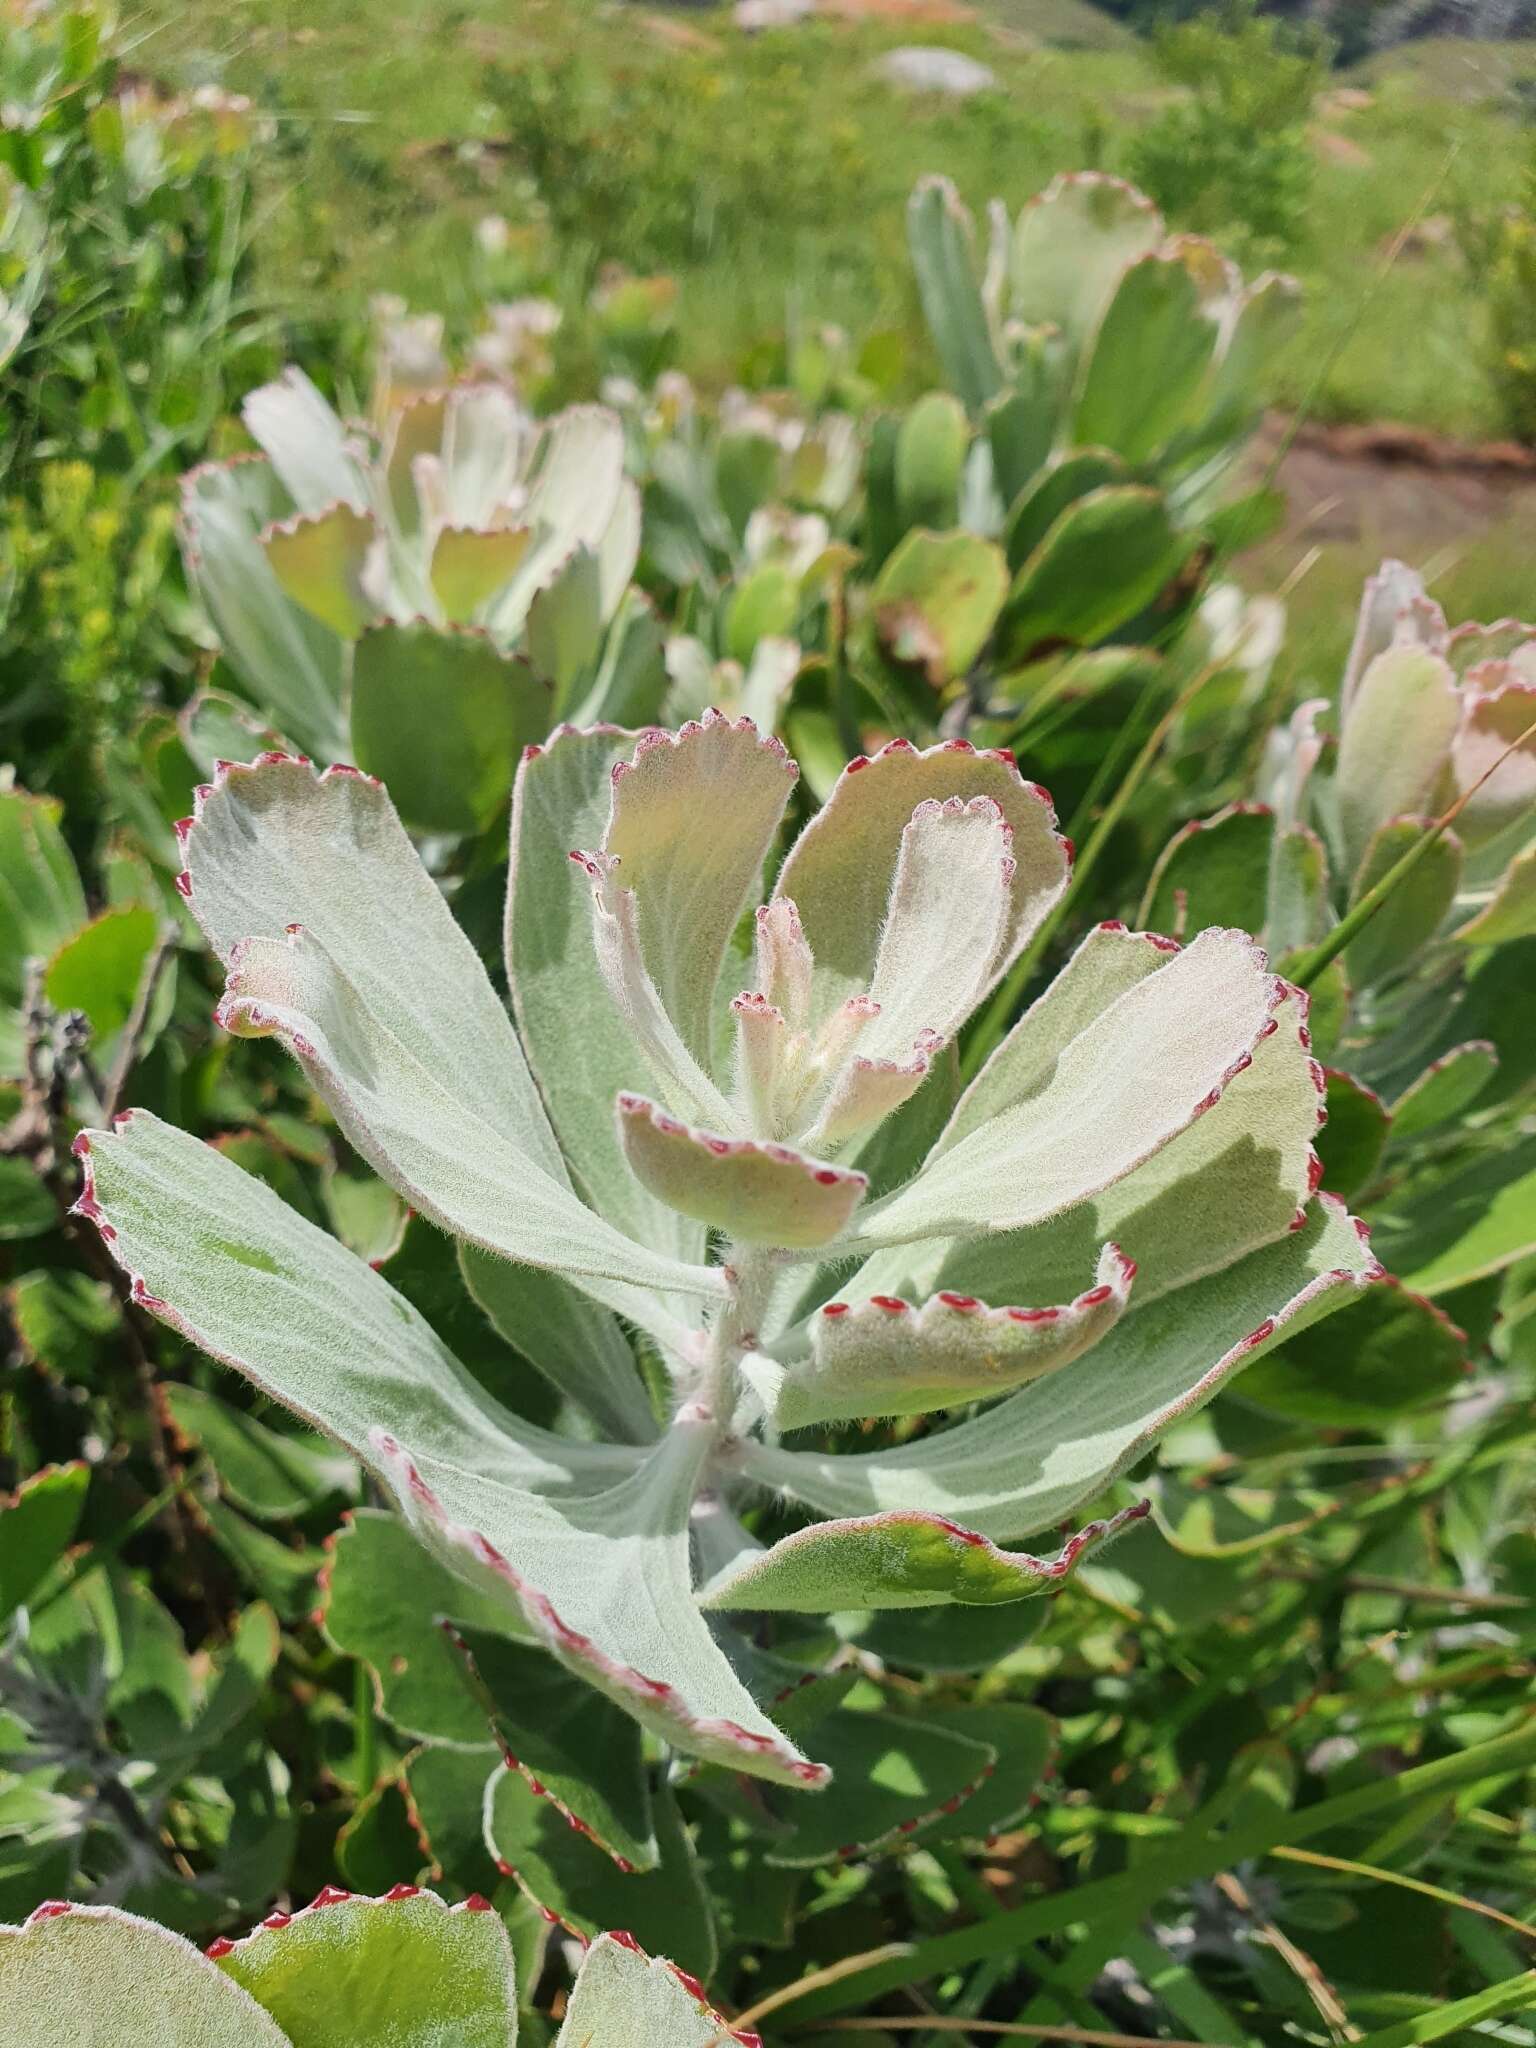 Image of Leucospermum innovans Rourke